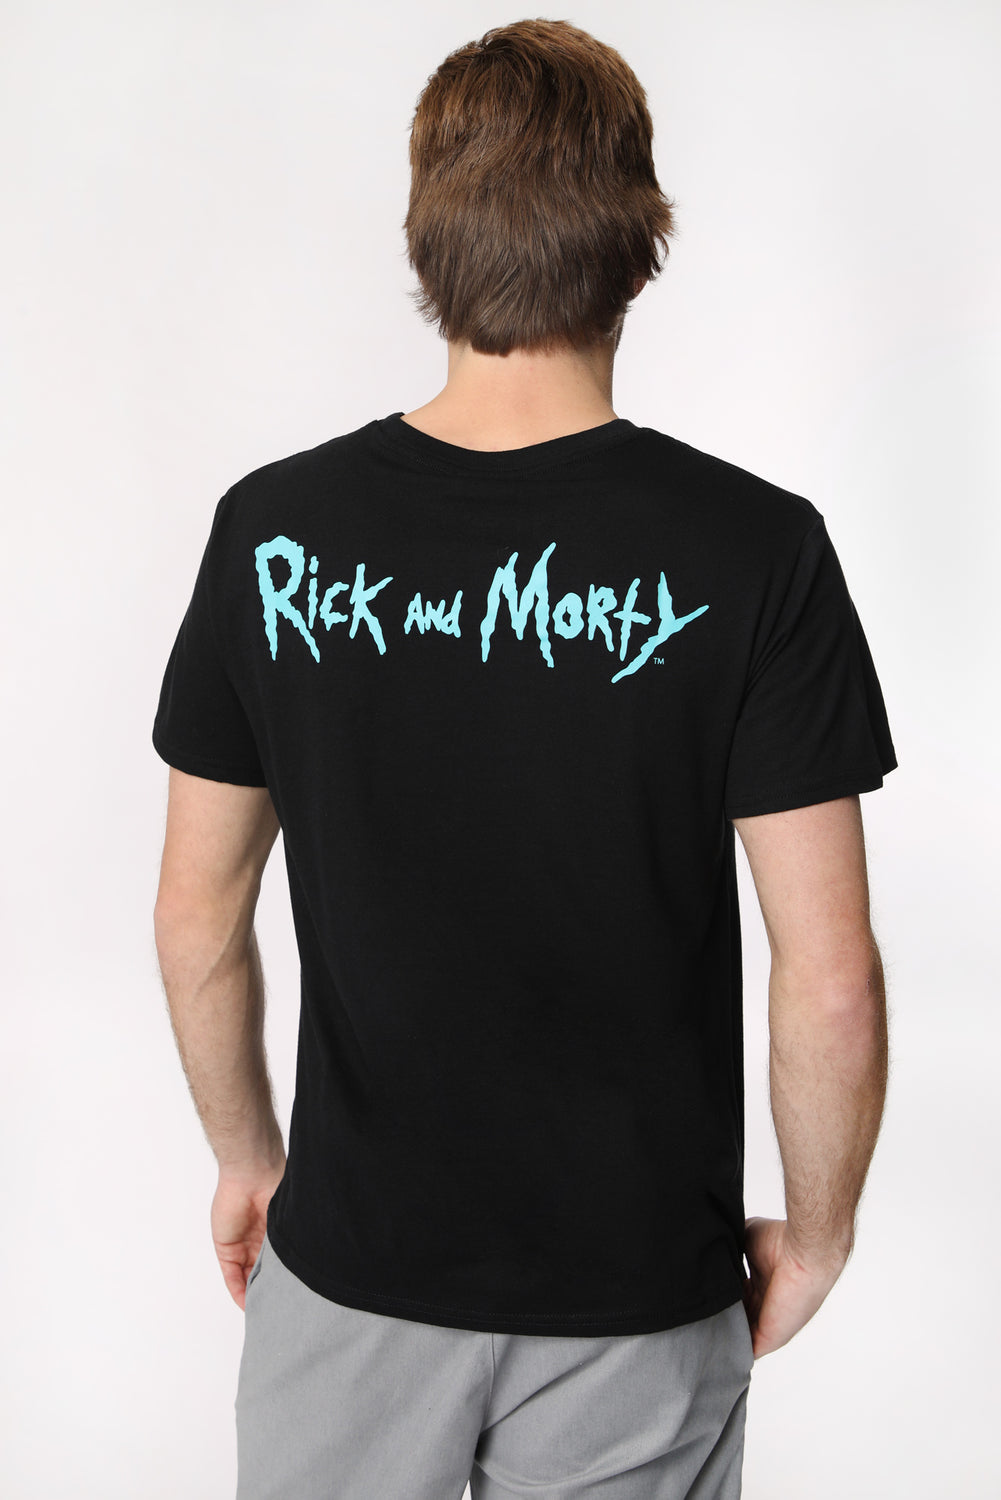 Mens Rick And Morty Portal Boys T-Shirt Mens Rick And Morty Portal Boys T-Shirt